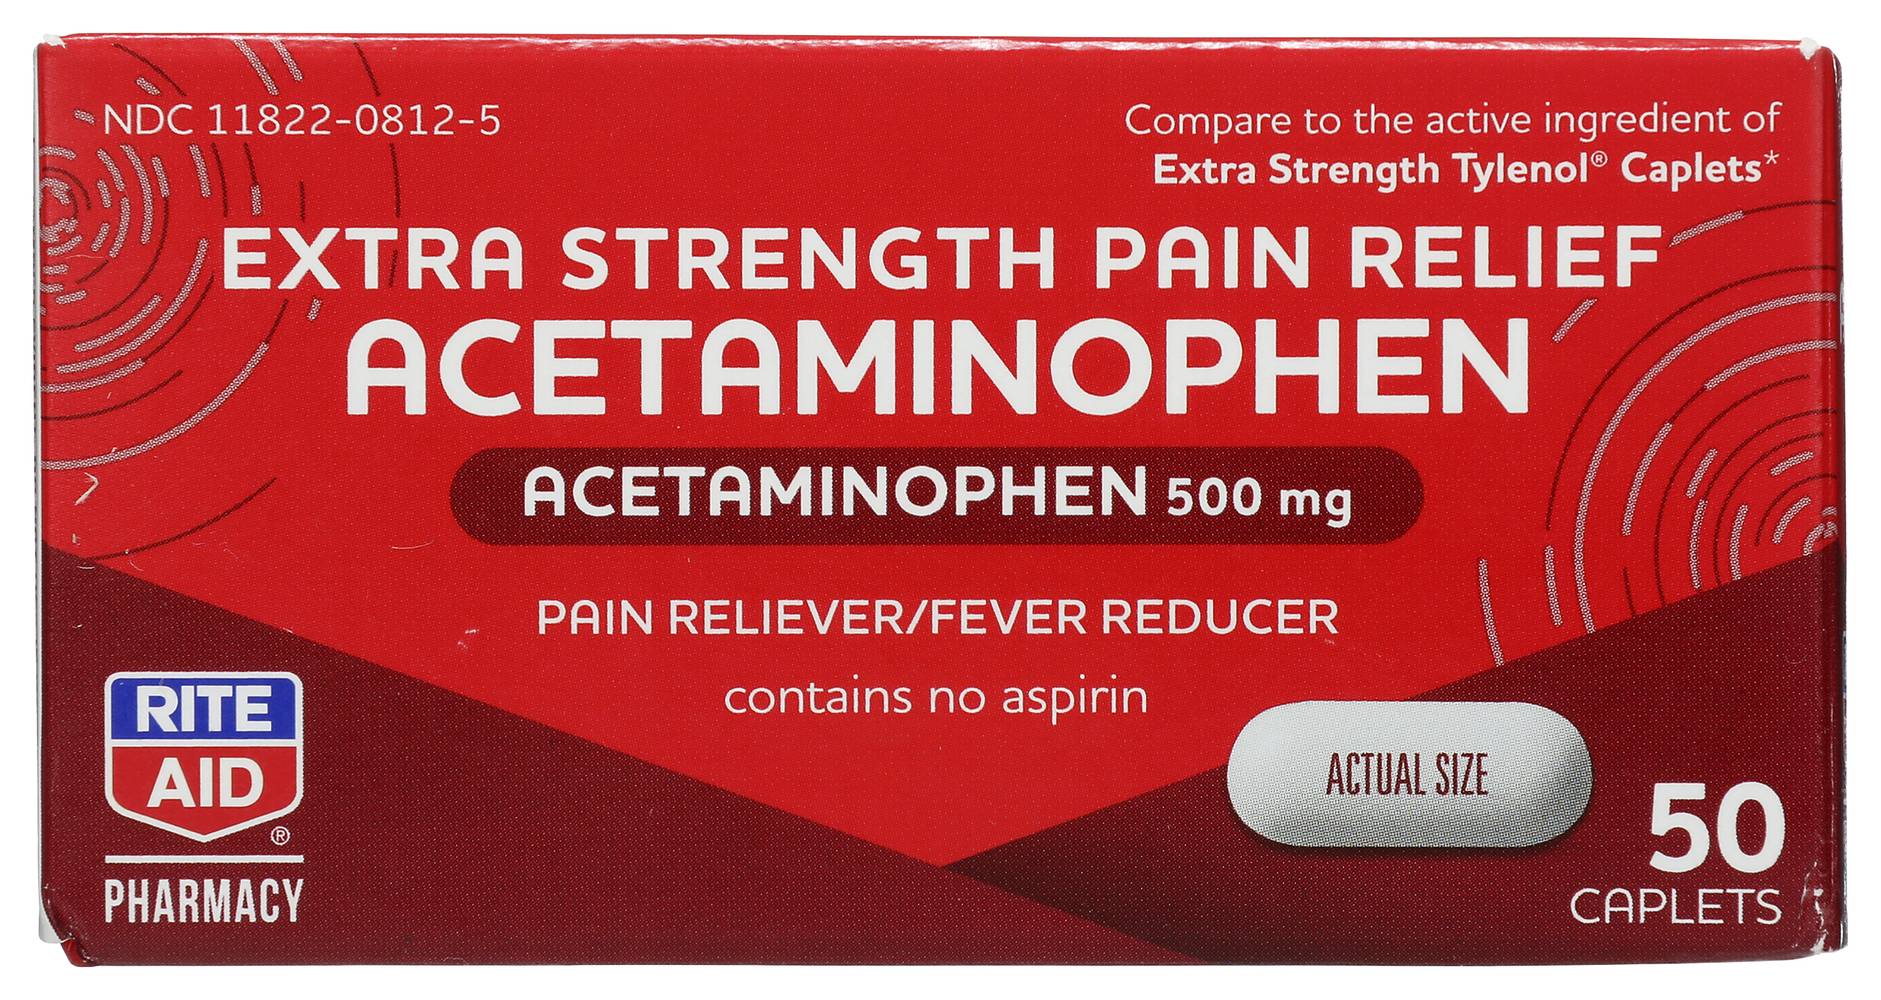 Rite Aid Extra Strength Acetaminophen 500 mg Caplets